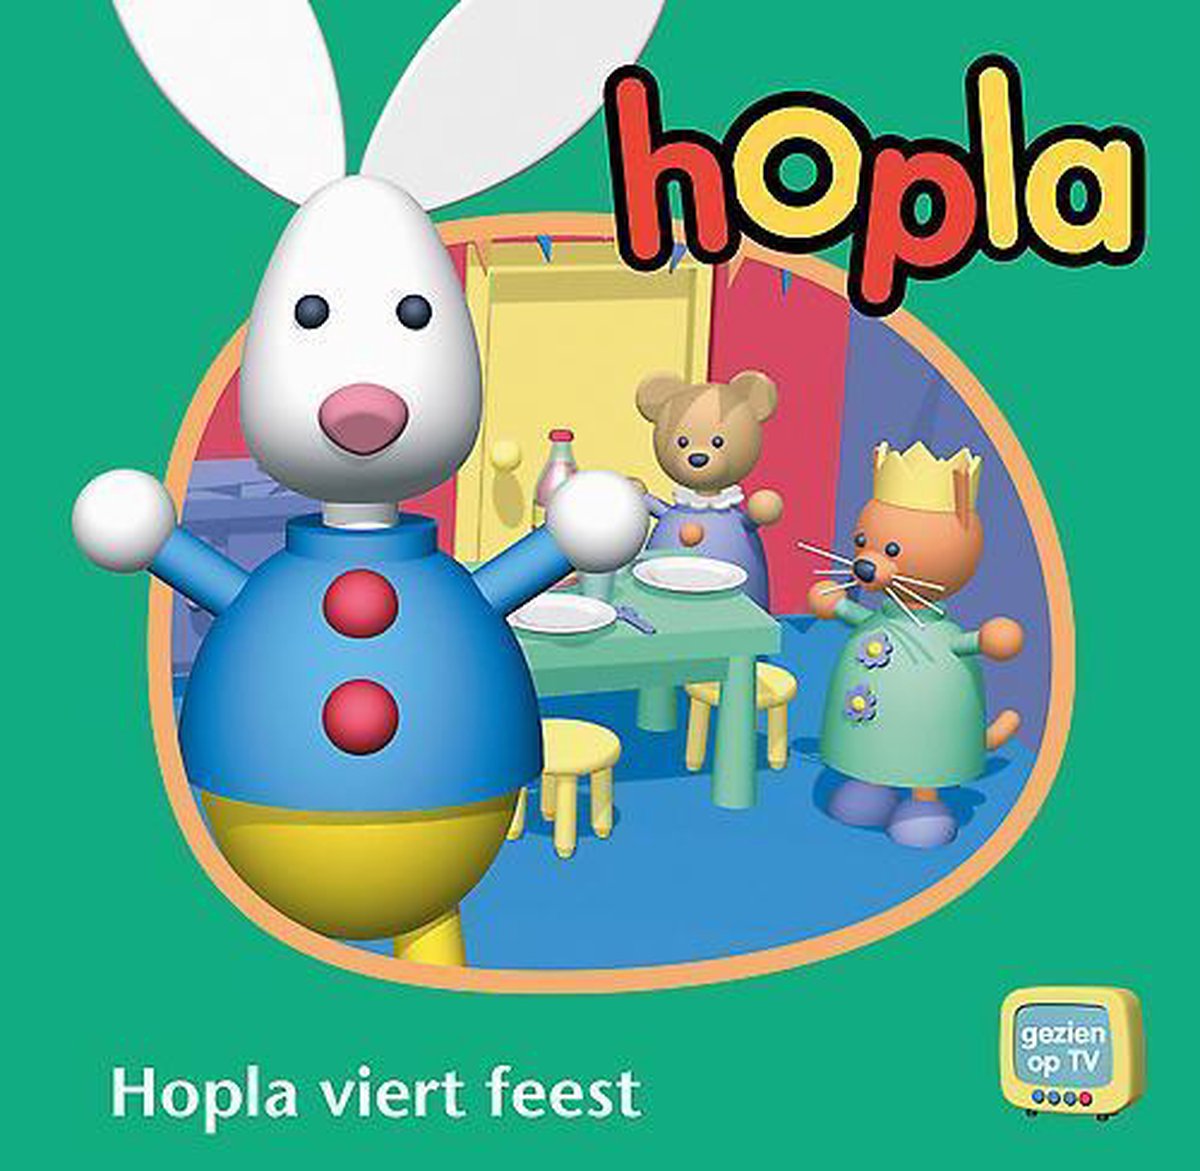 Hopla viert feest (special Splendid)